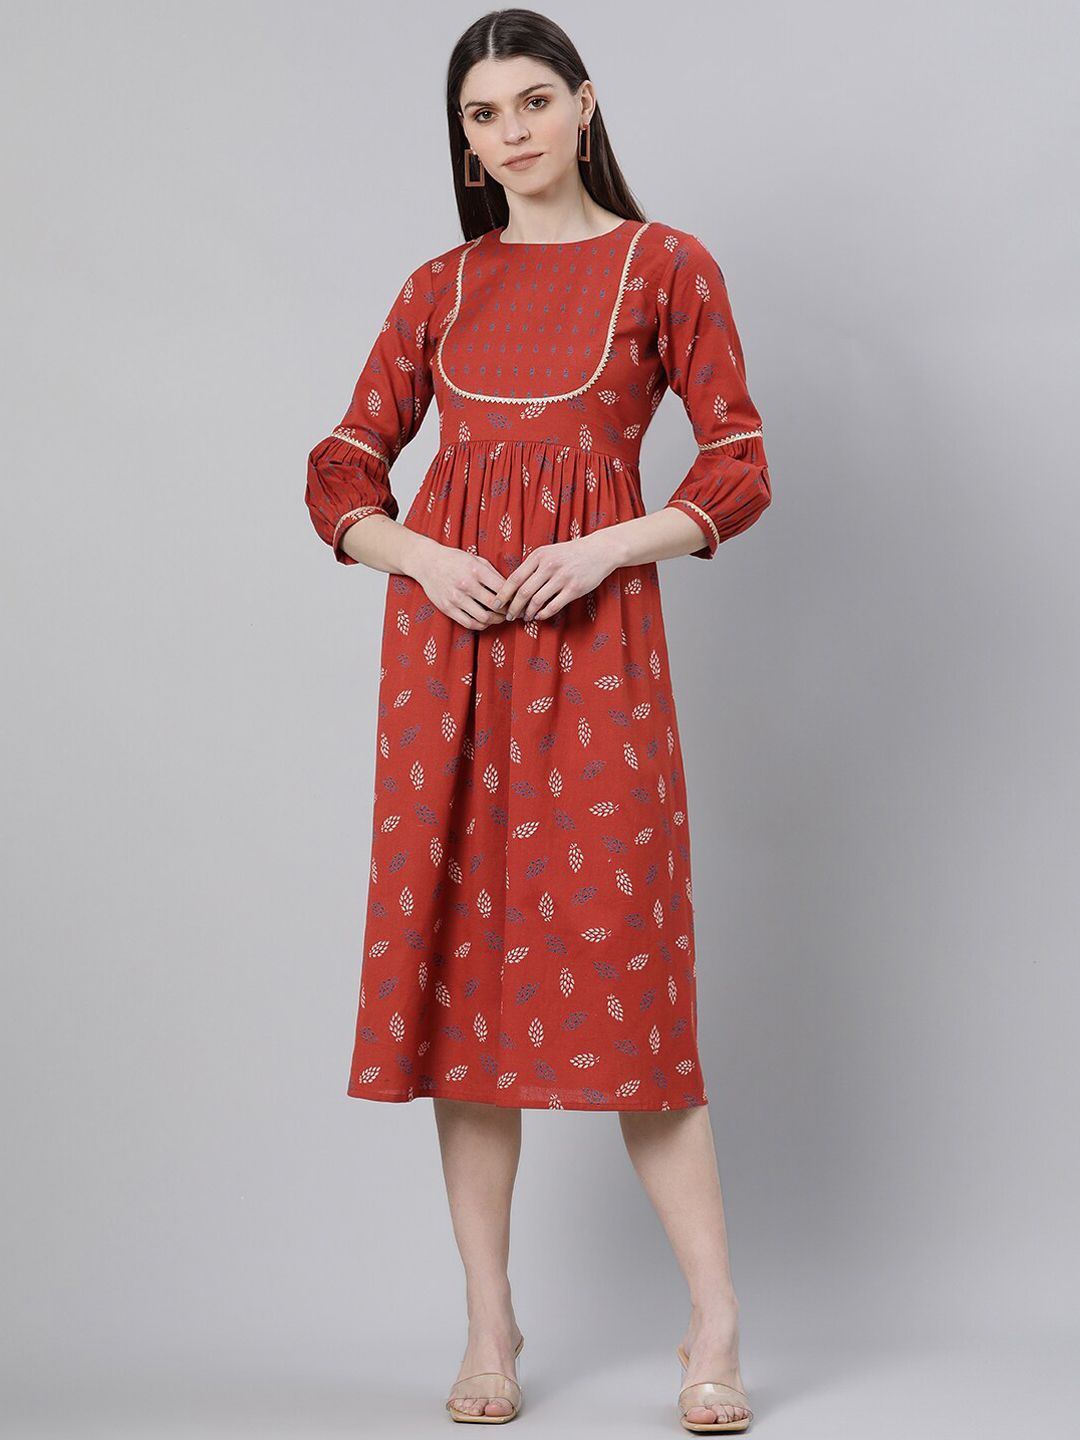 GERUA Women Rust Red Printed Empire Dress Price in India